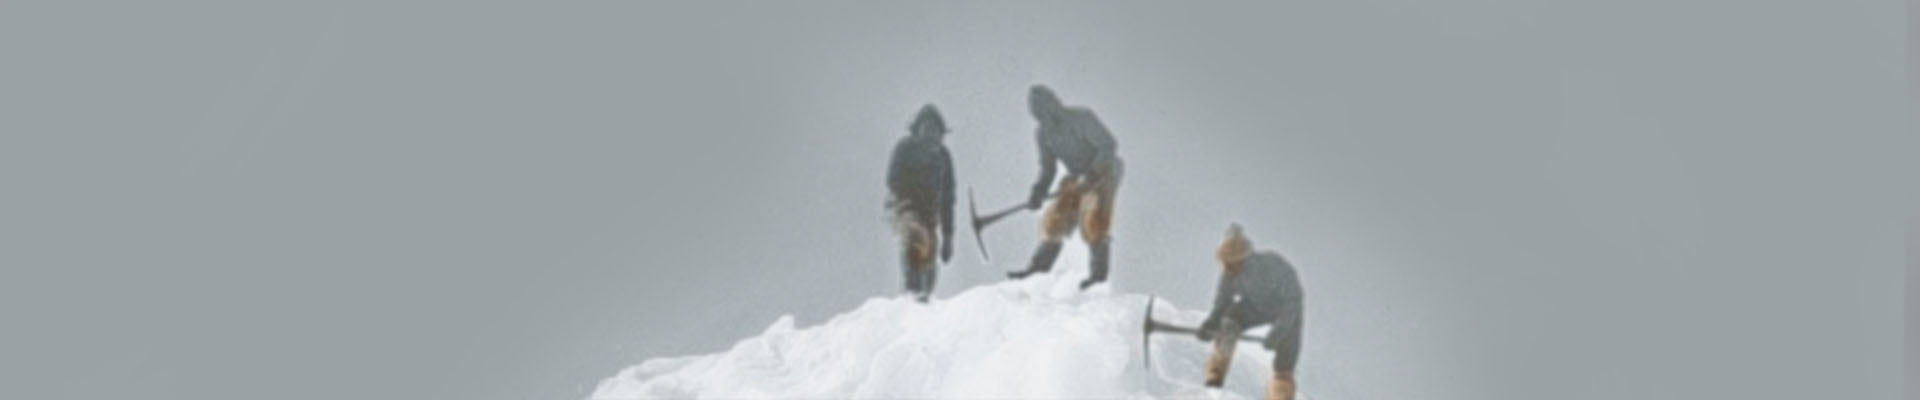 Hole in snowbank for shelter – Crocker Land Expedition